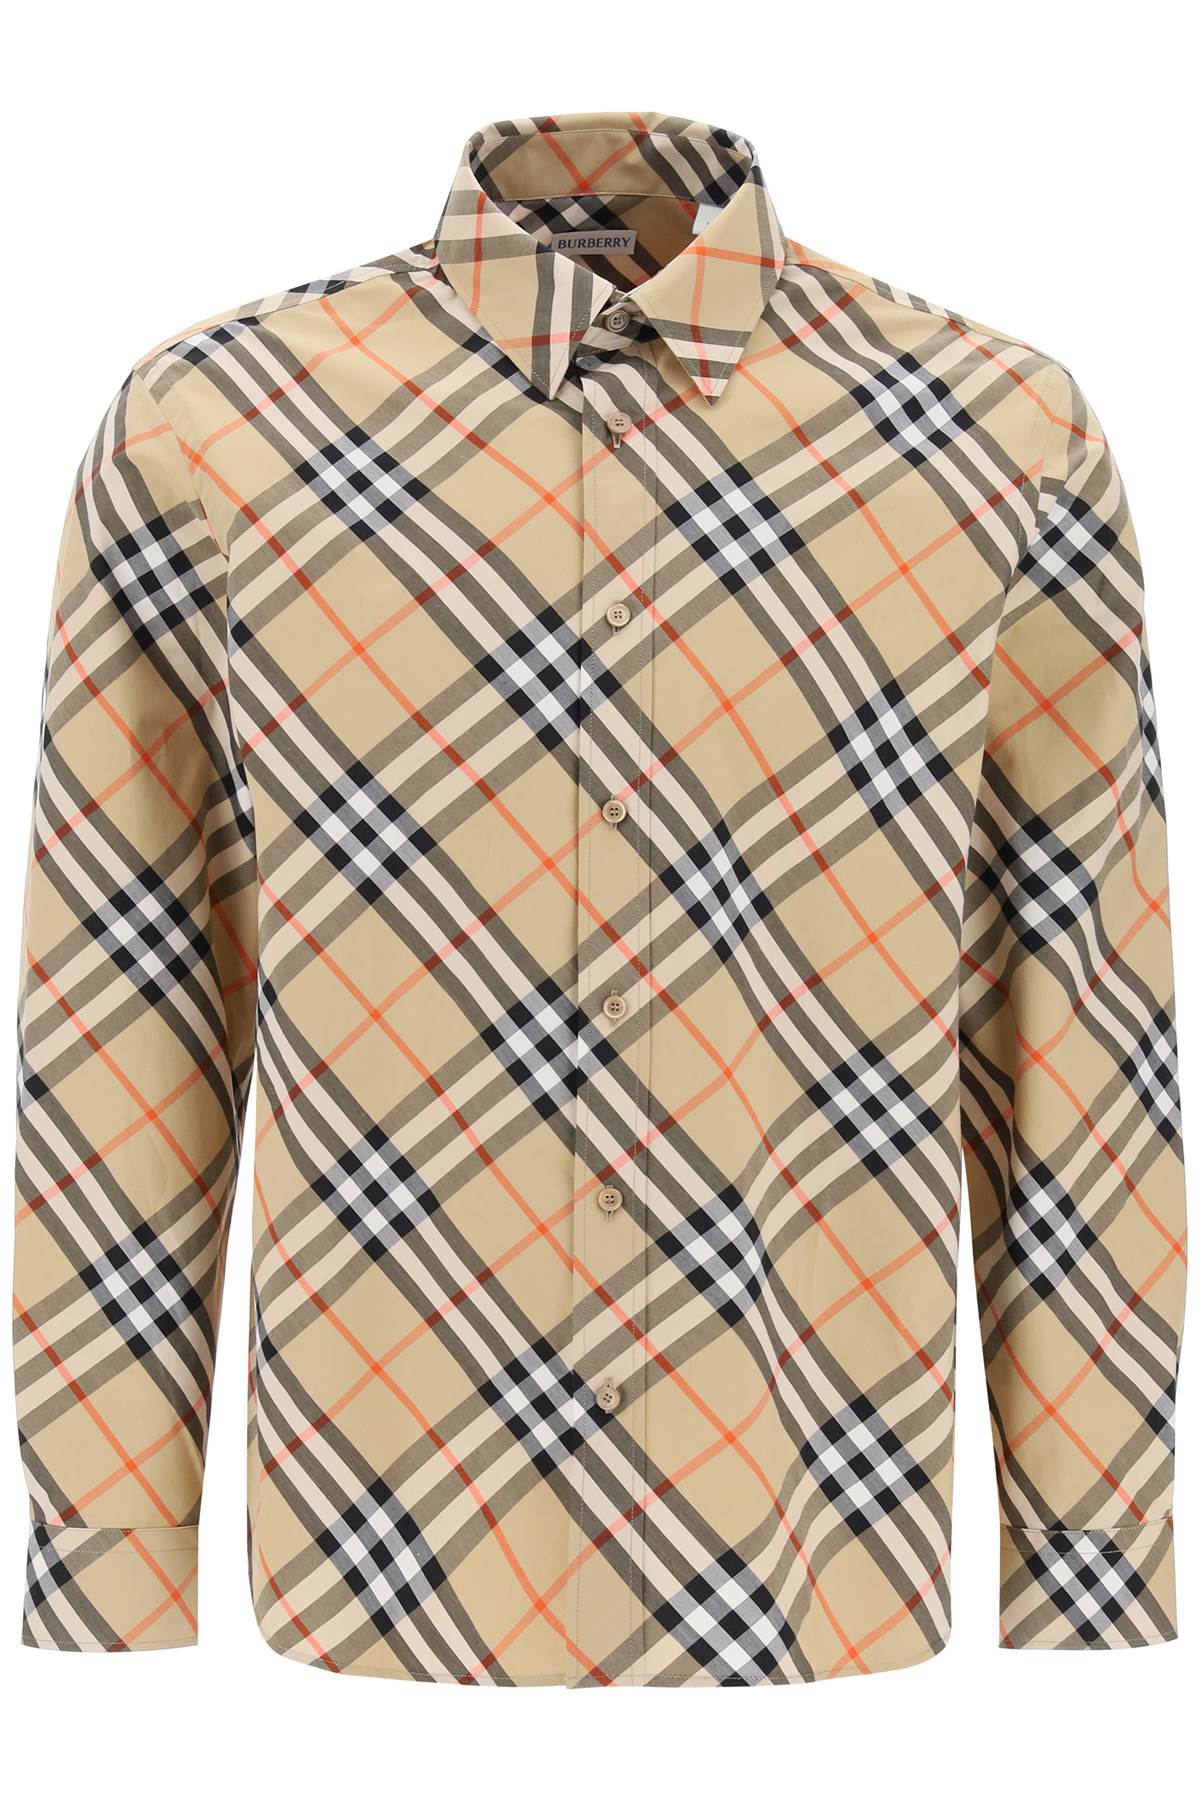 Burberry BURBERRY ered cotton long-sleeved shirt